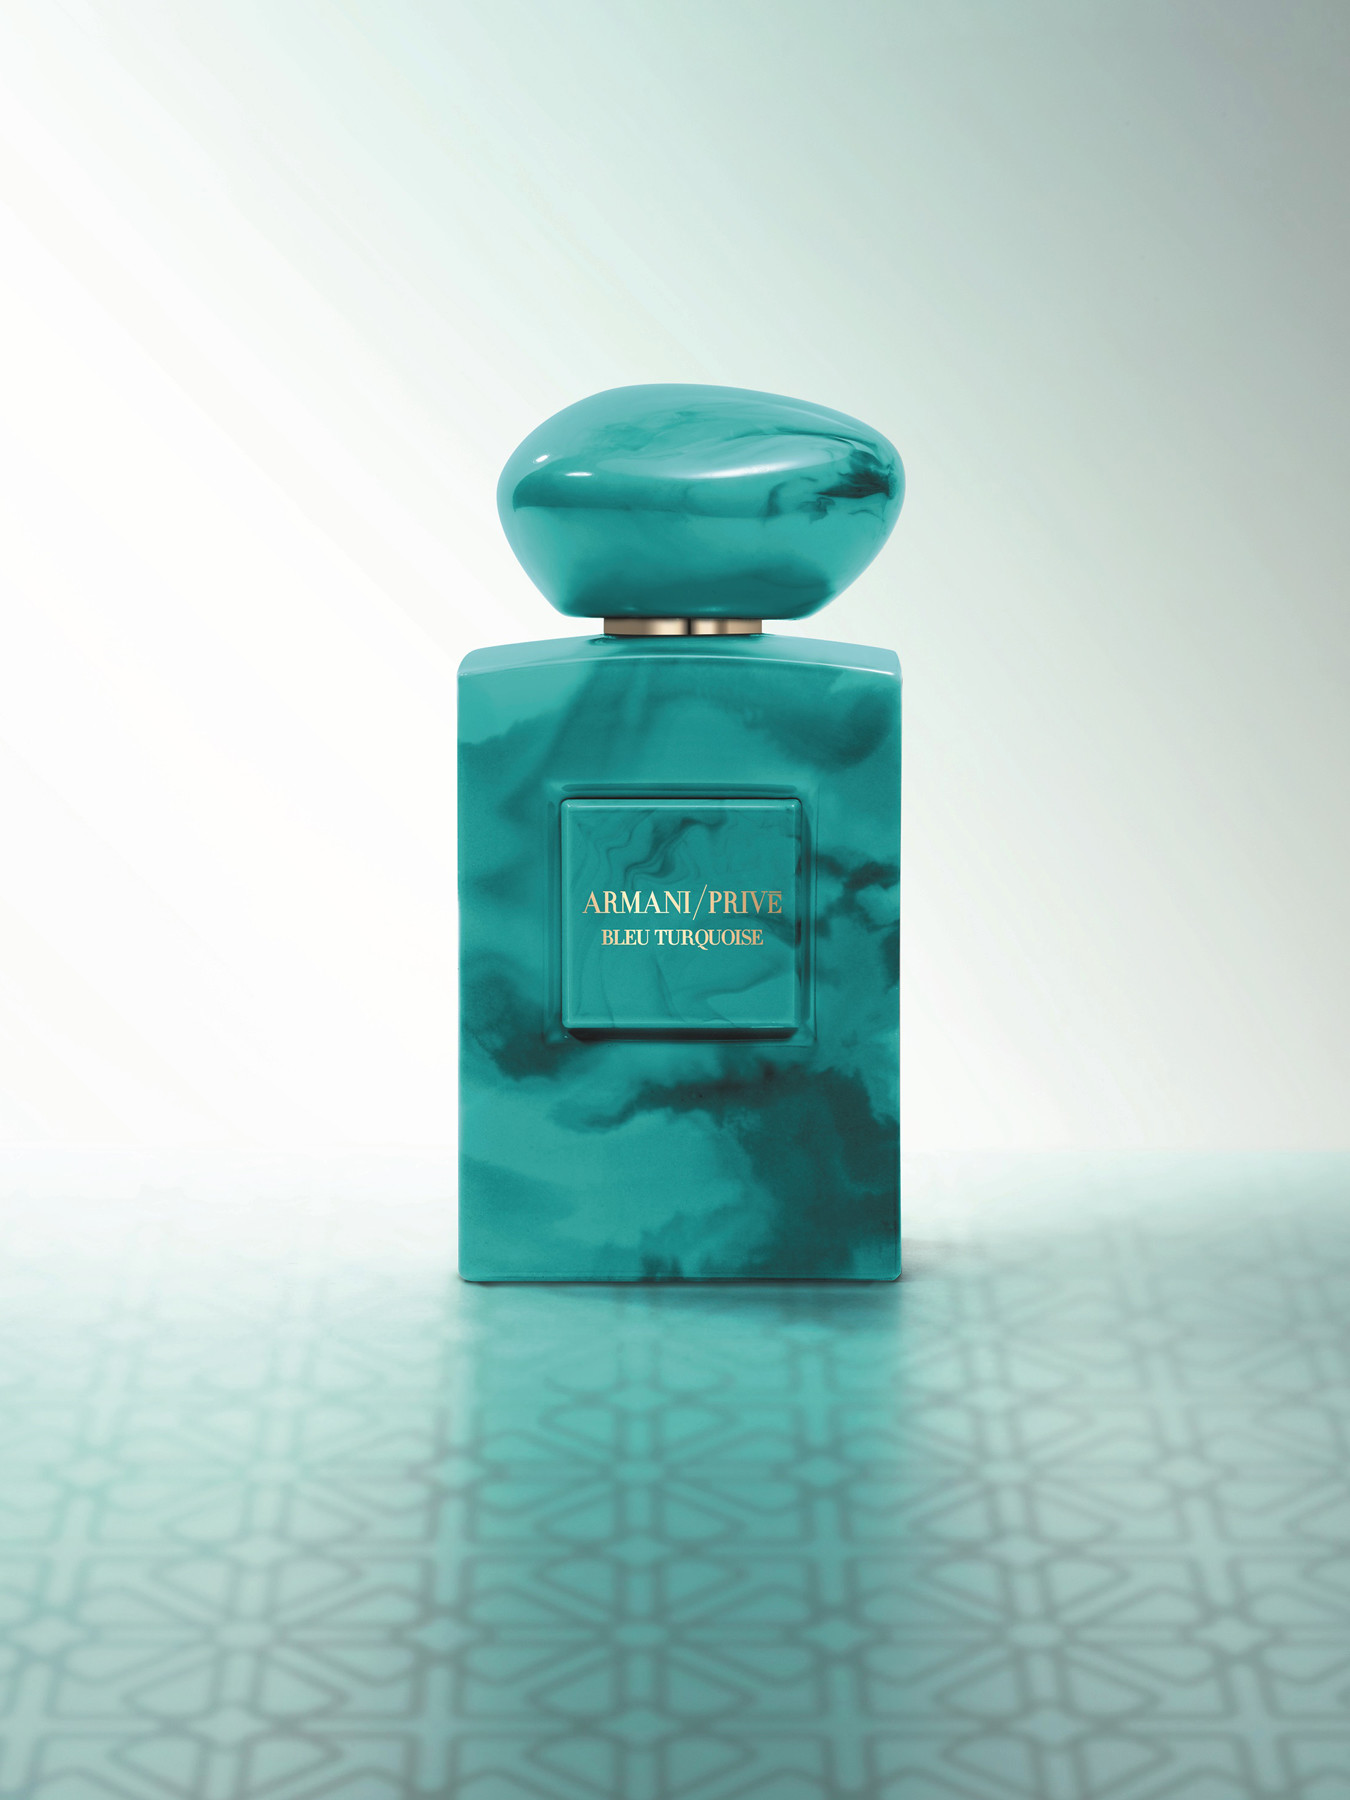 Giorgio Armani Privé Prive Bleu Turquoise Eau de Parfum 100 ml